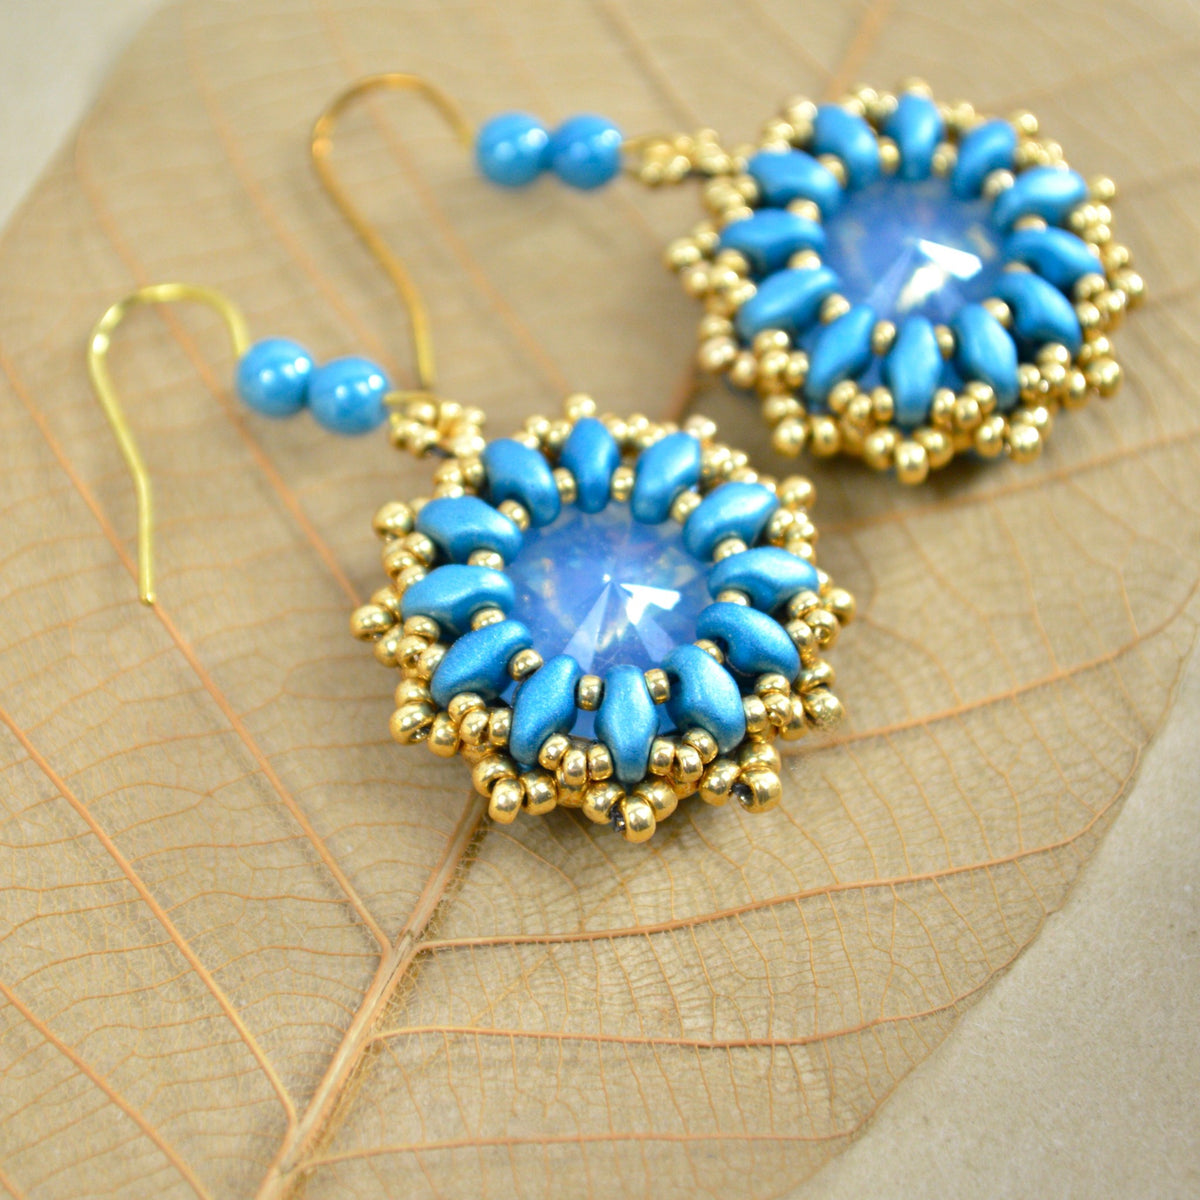 Lucca Woven Bead Earrings, Sky Blue, Handmade In Italy - My Italian Decor